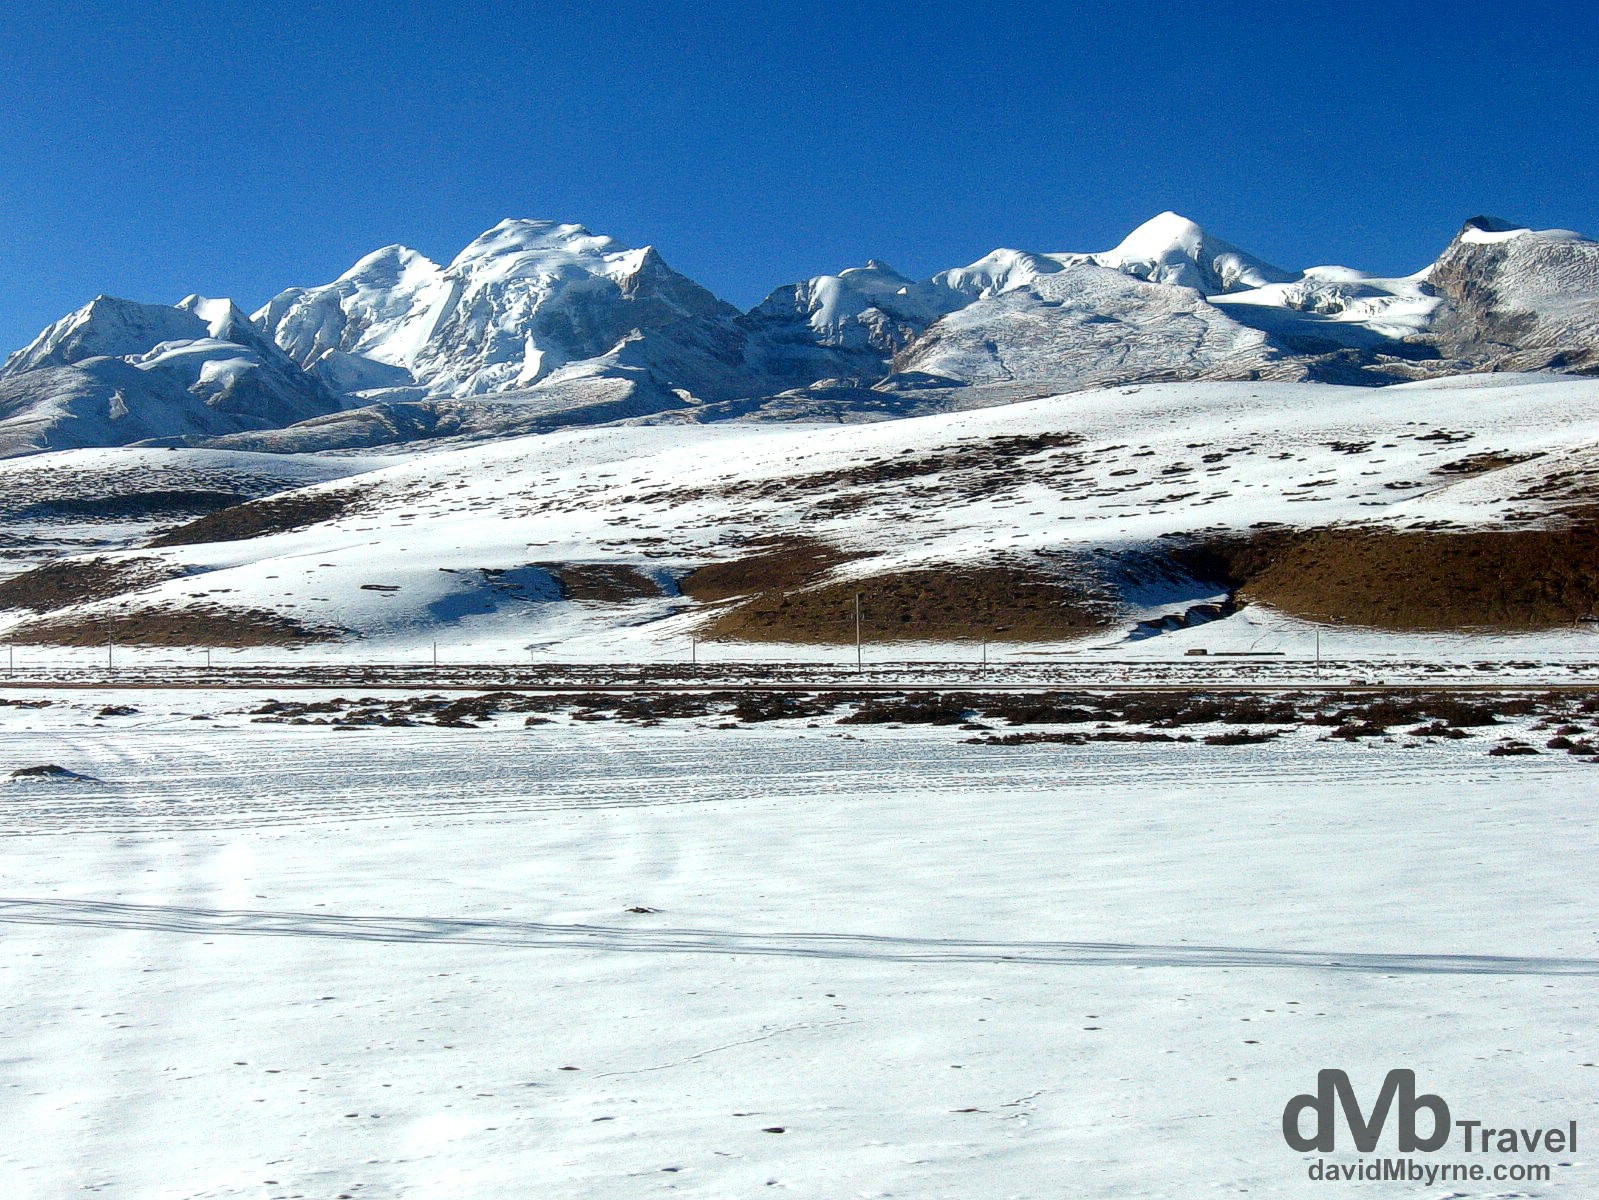 Tibetan Plateau scenery as seen from the Qinghai–Tibet Railway. February 24th, 2008.